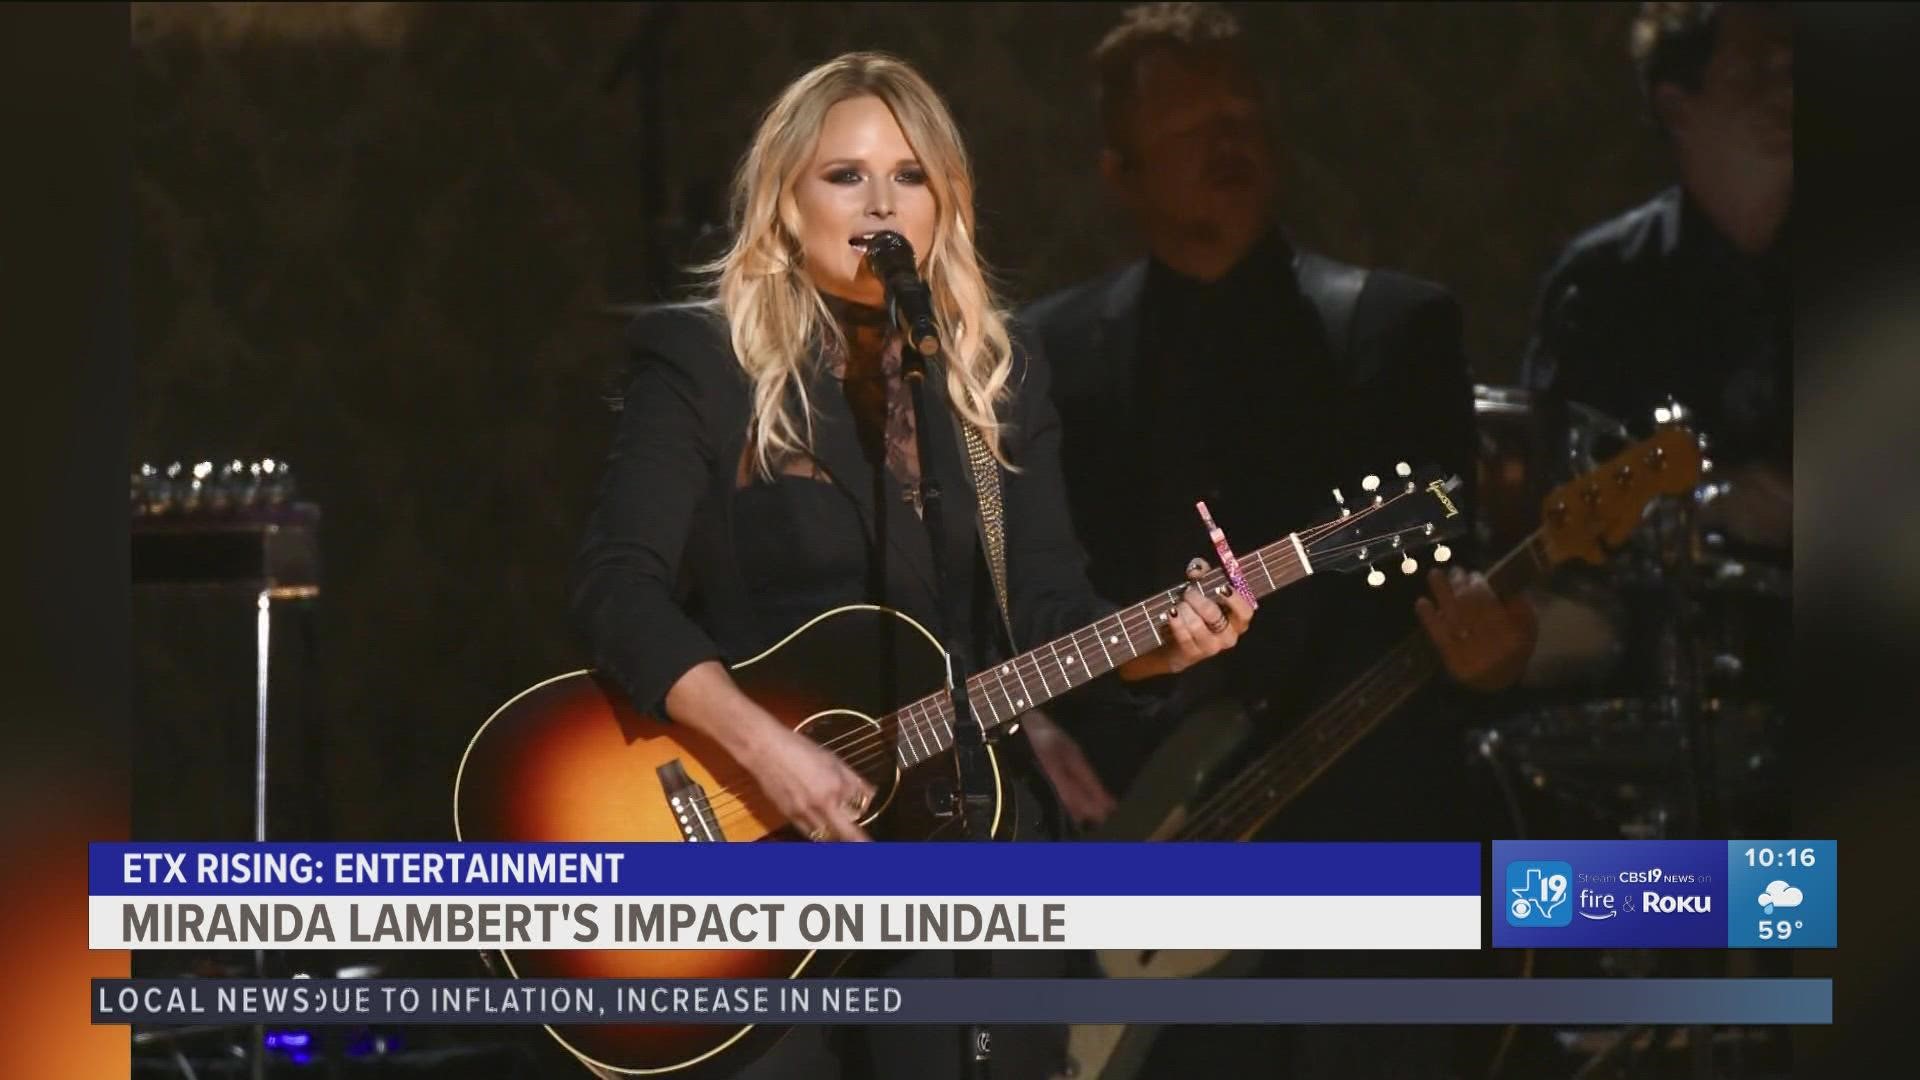 Miranda Lambert's influence makes musical impact on her hometown of Lindale